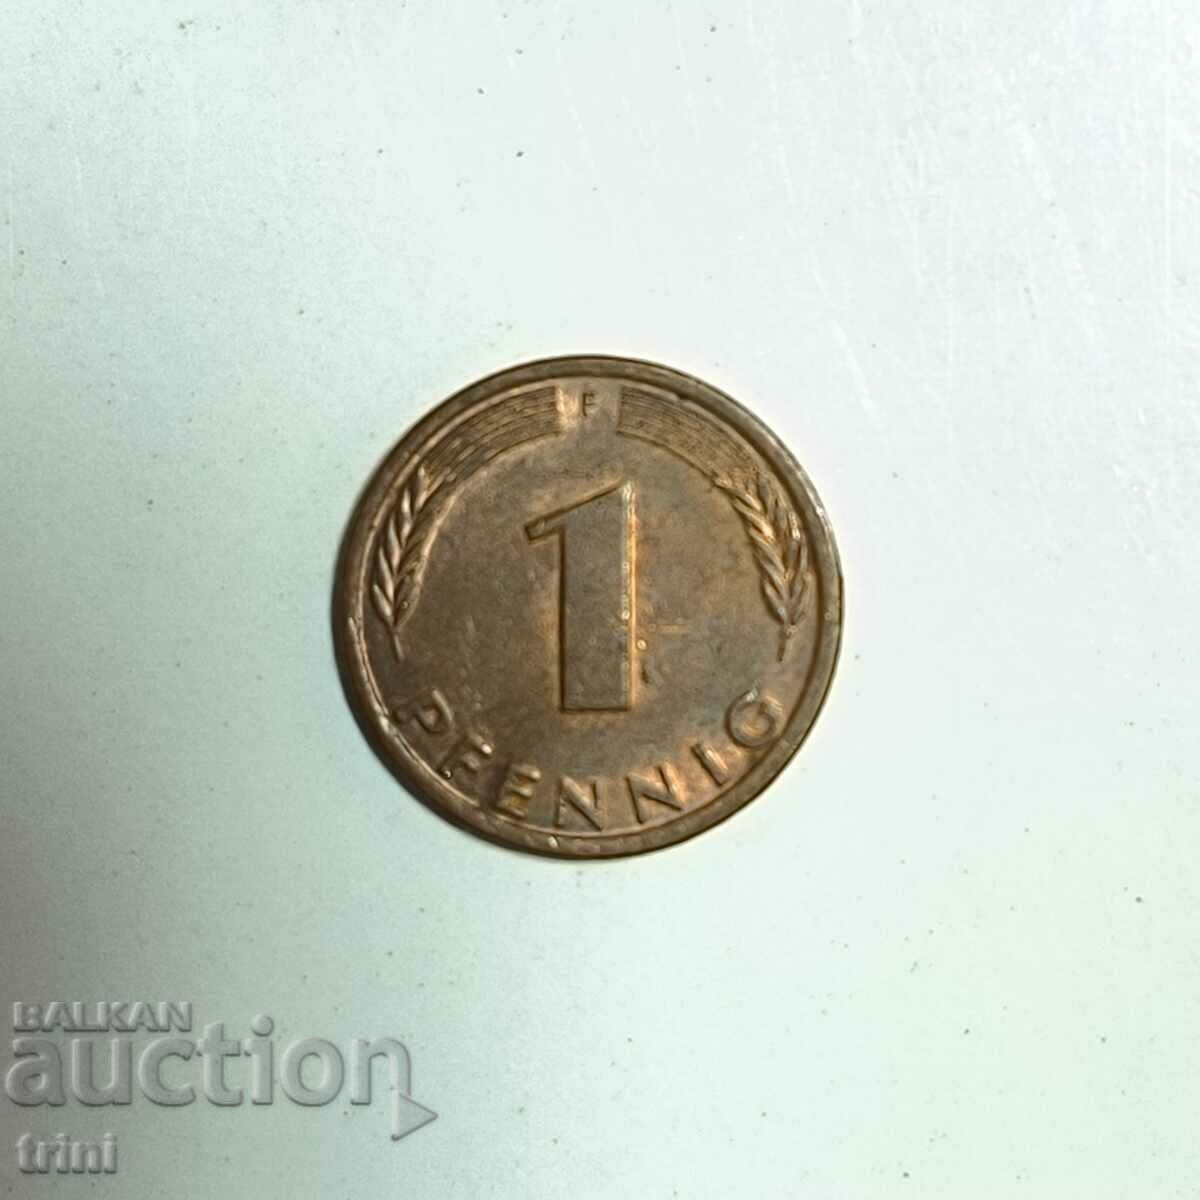 Germania 1 pfennig 1981 anul „F” - Stuttgart e187